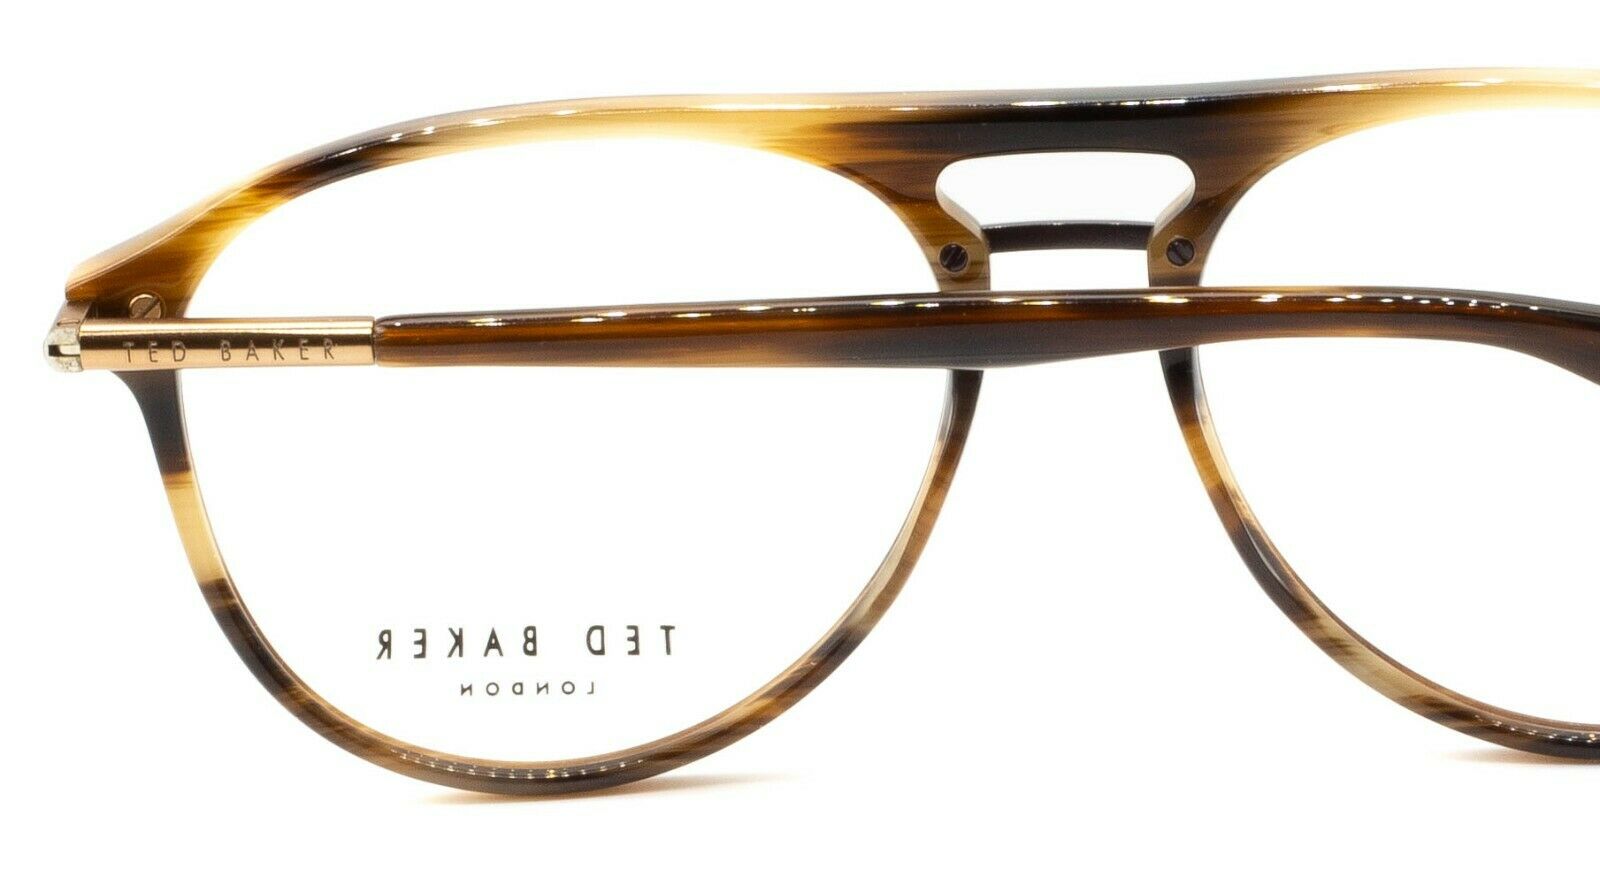 TED BAKER 8192 155 Keller 56mm Eyewear FRAMES Glasses Eyeglasses RX Optical New